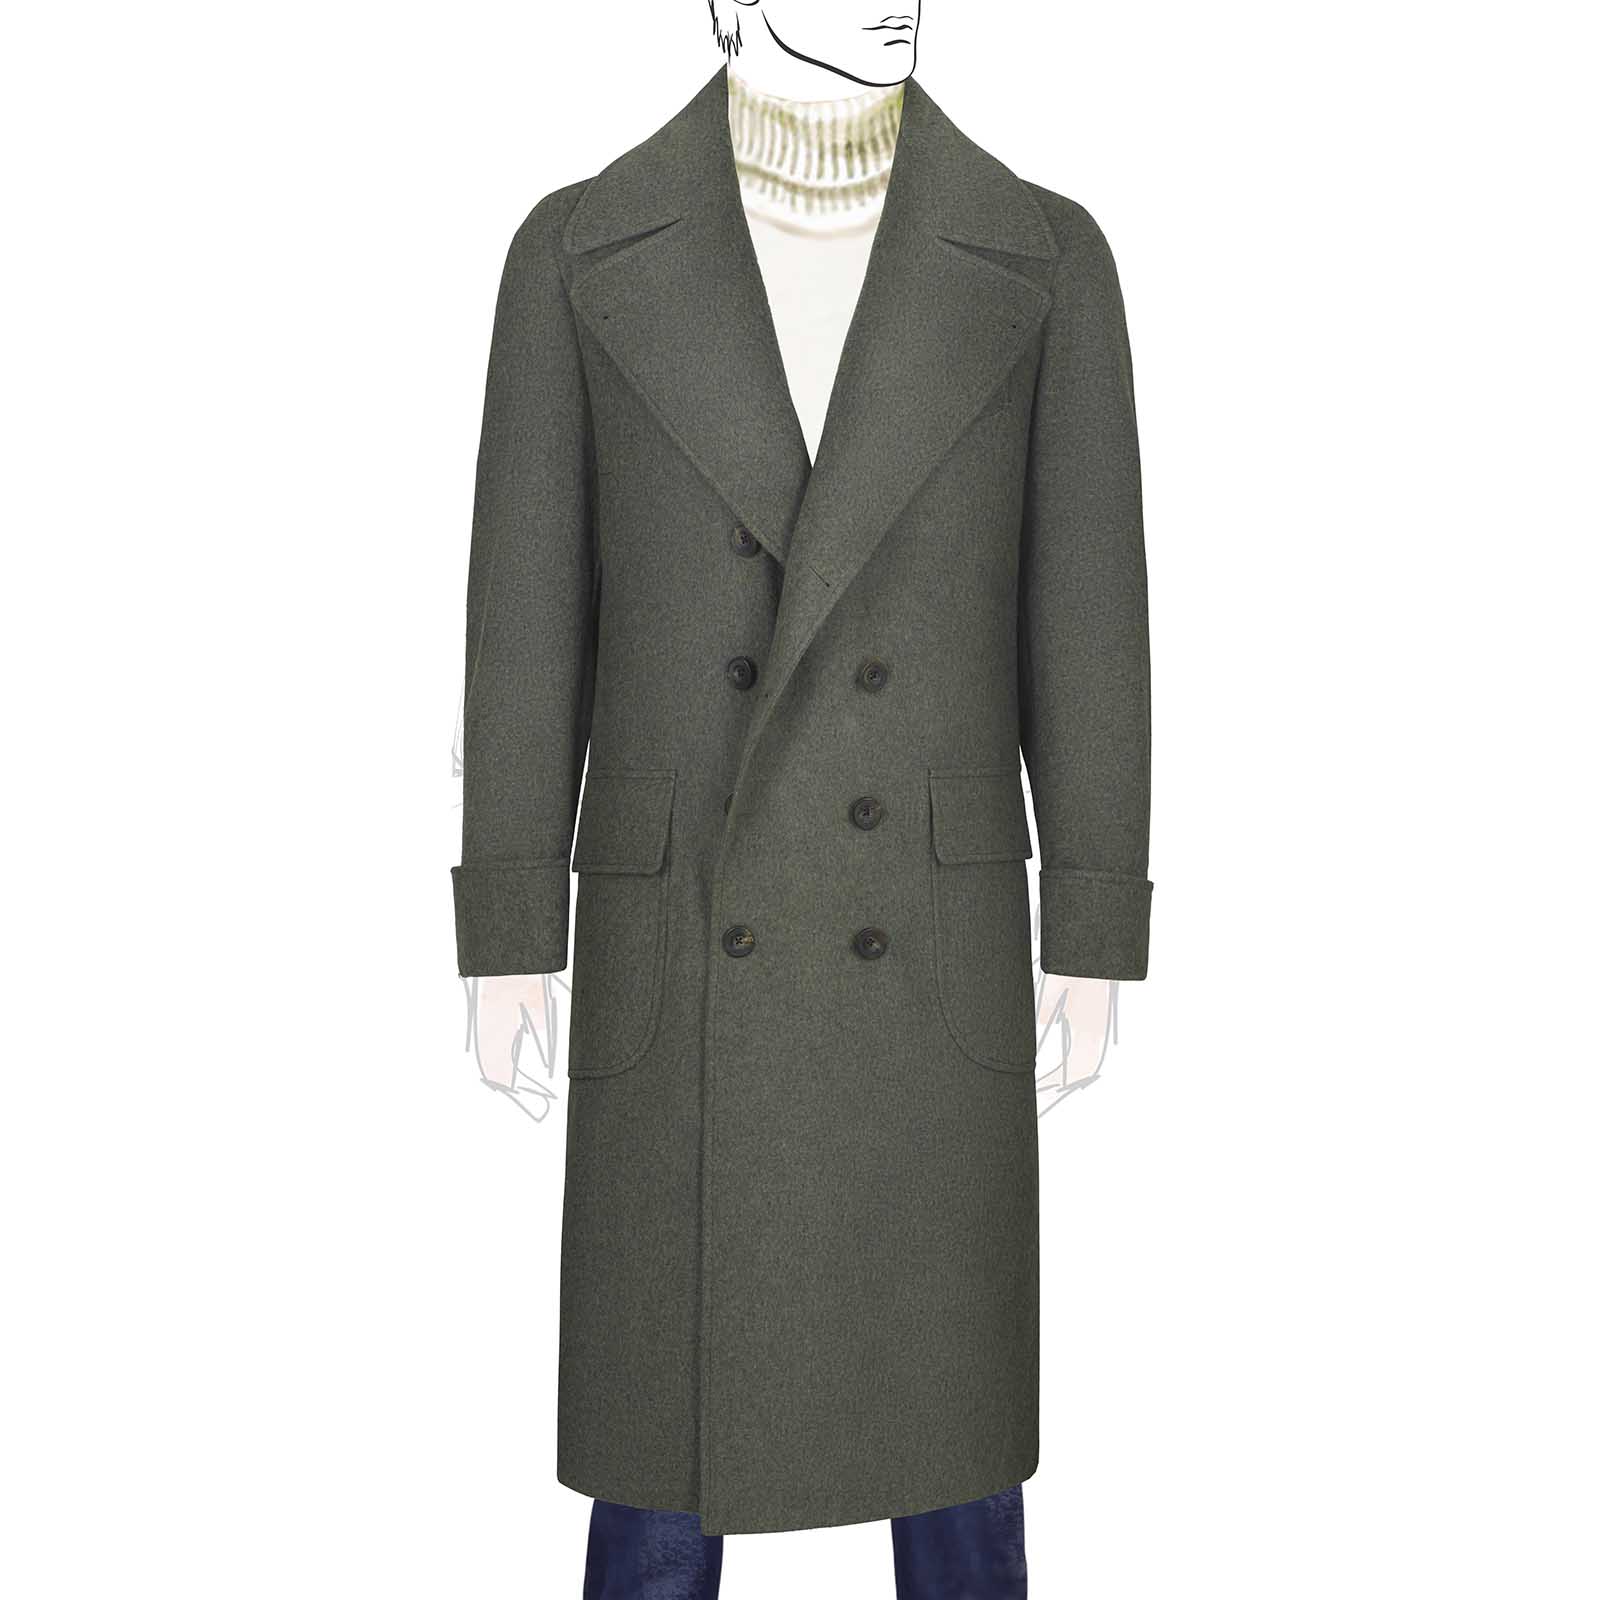 Mariano Rubinacci - Green cashmere ulster coat